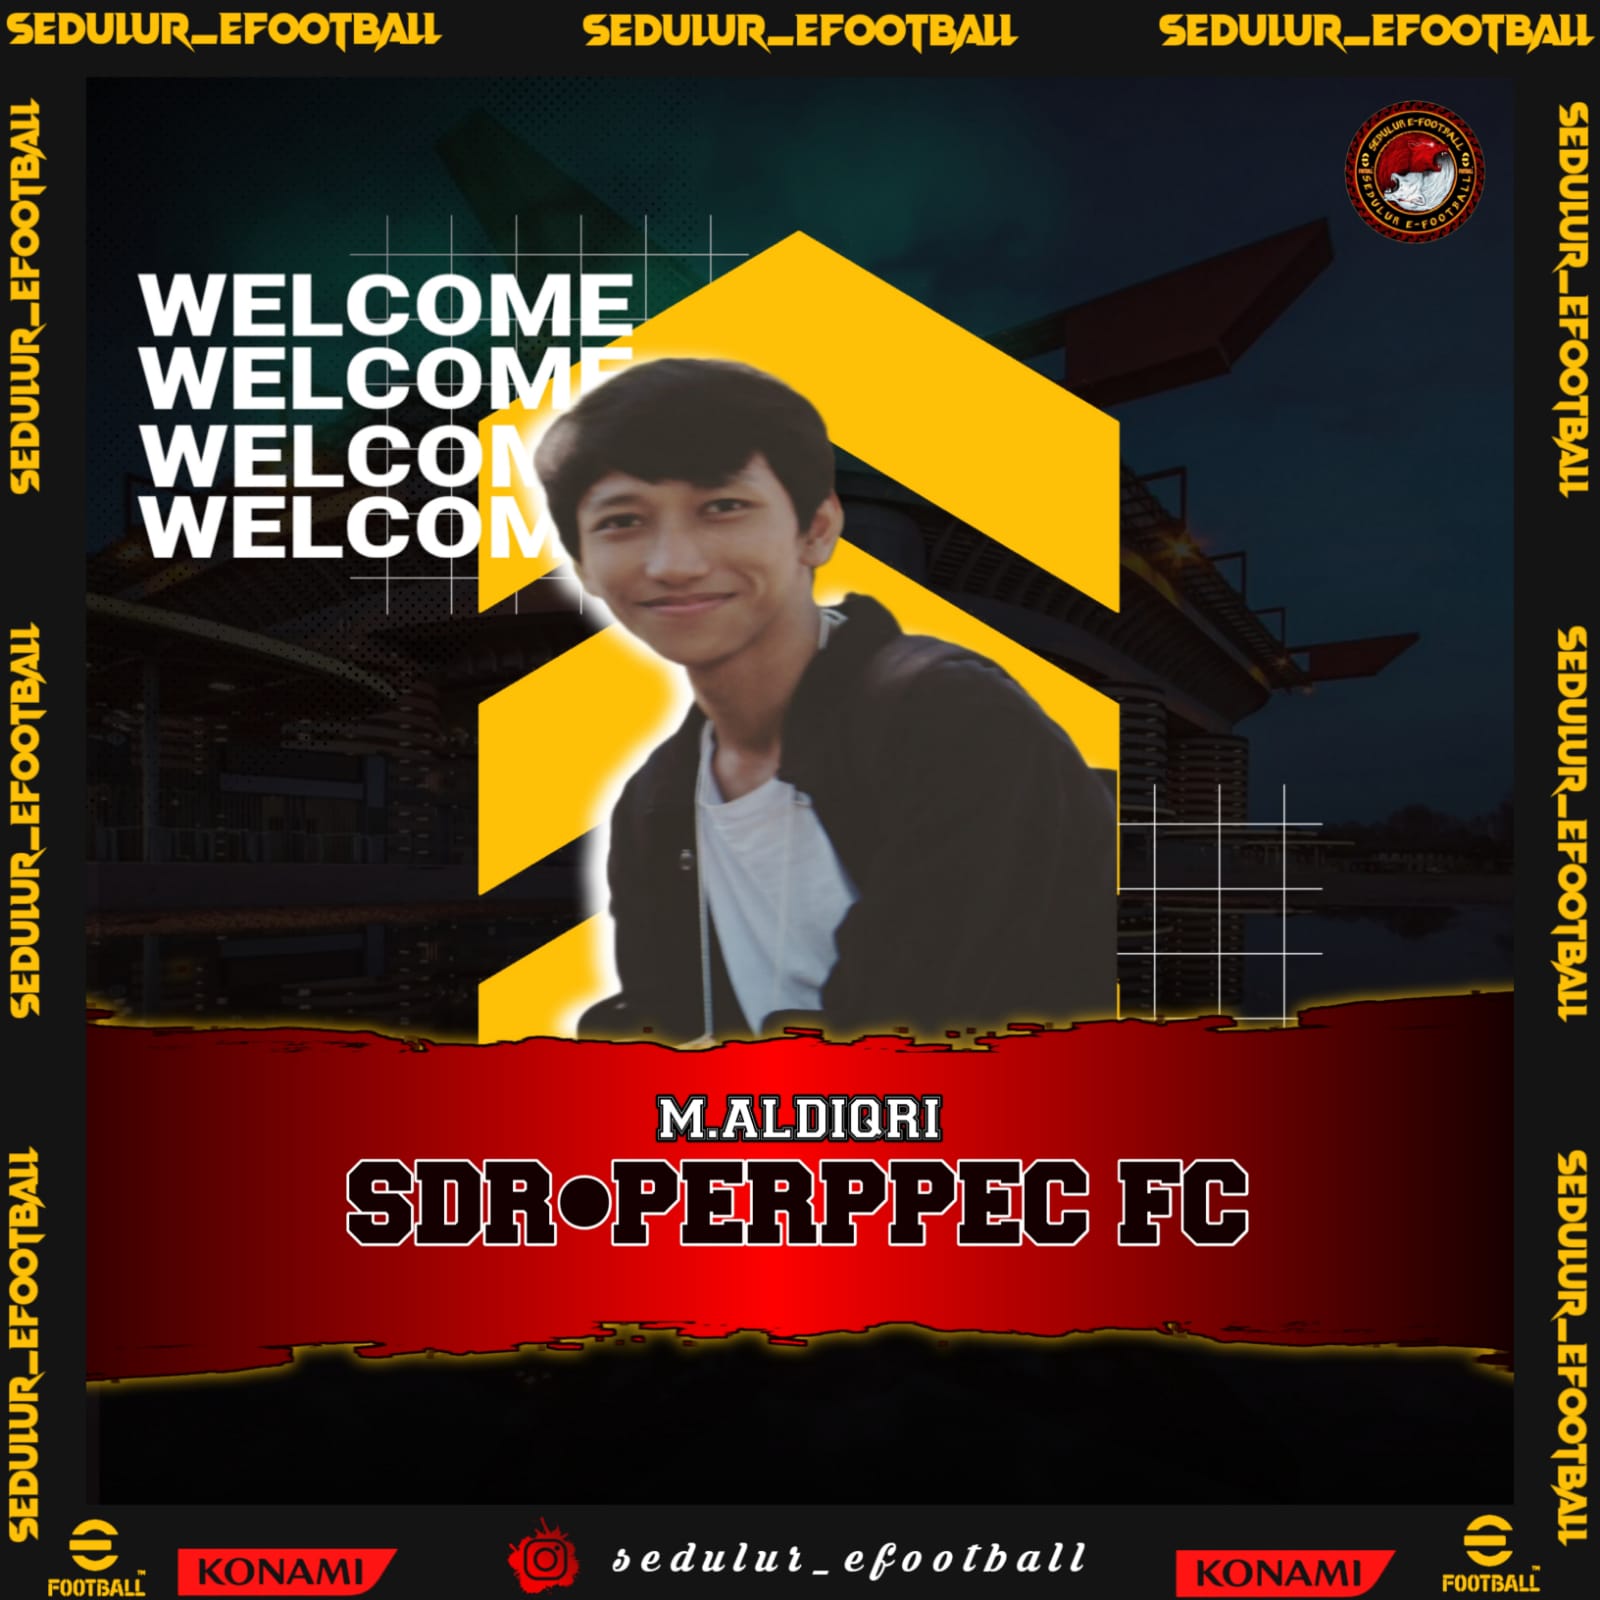 SDR•PERPPEC FC